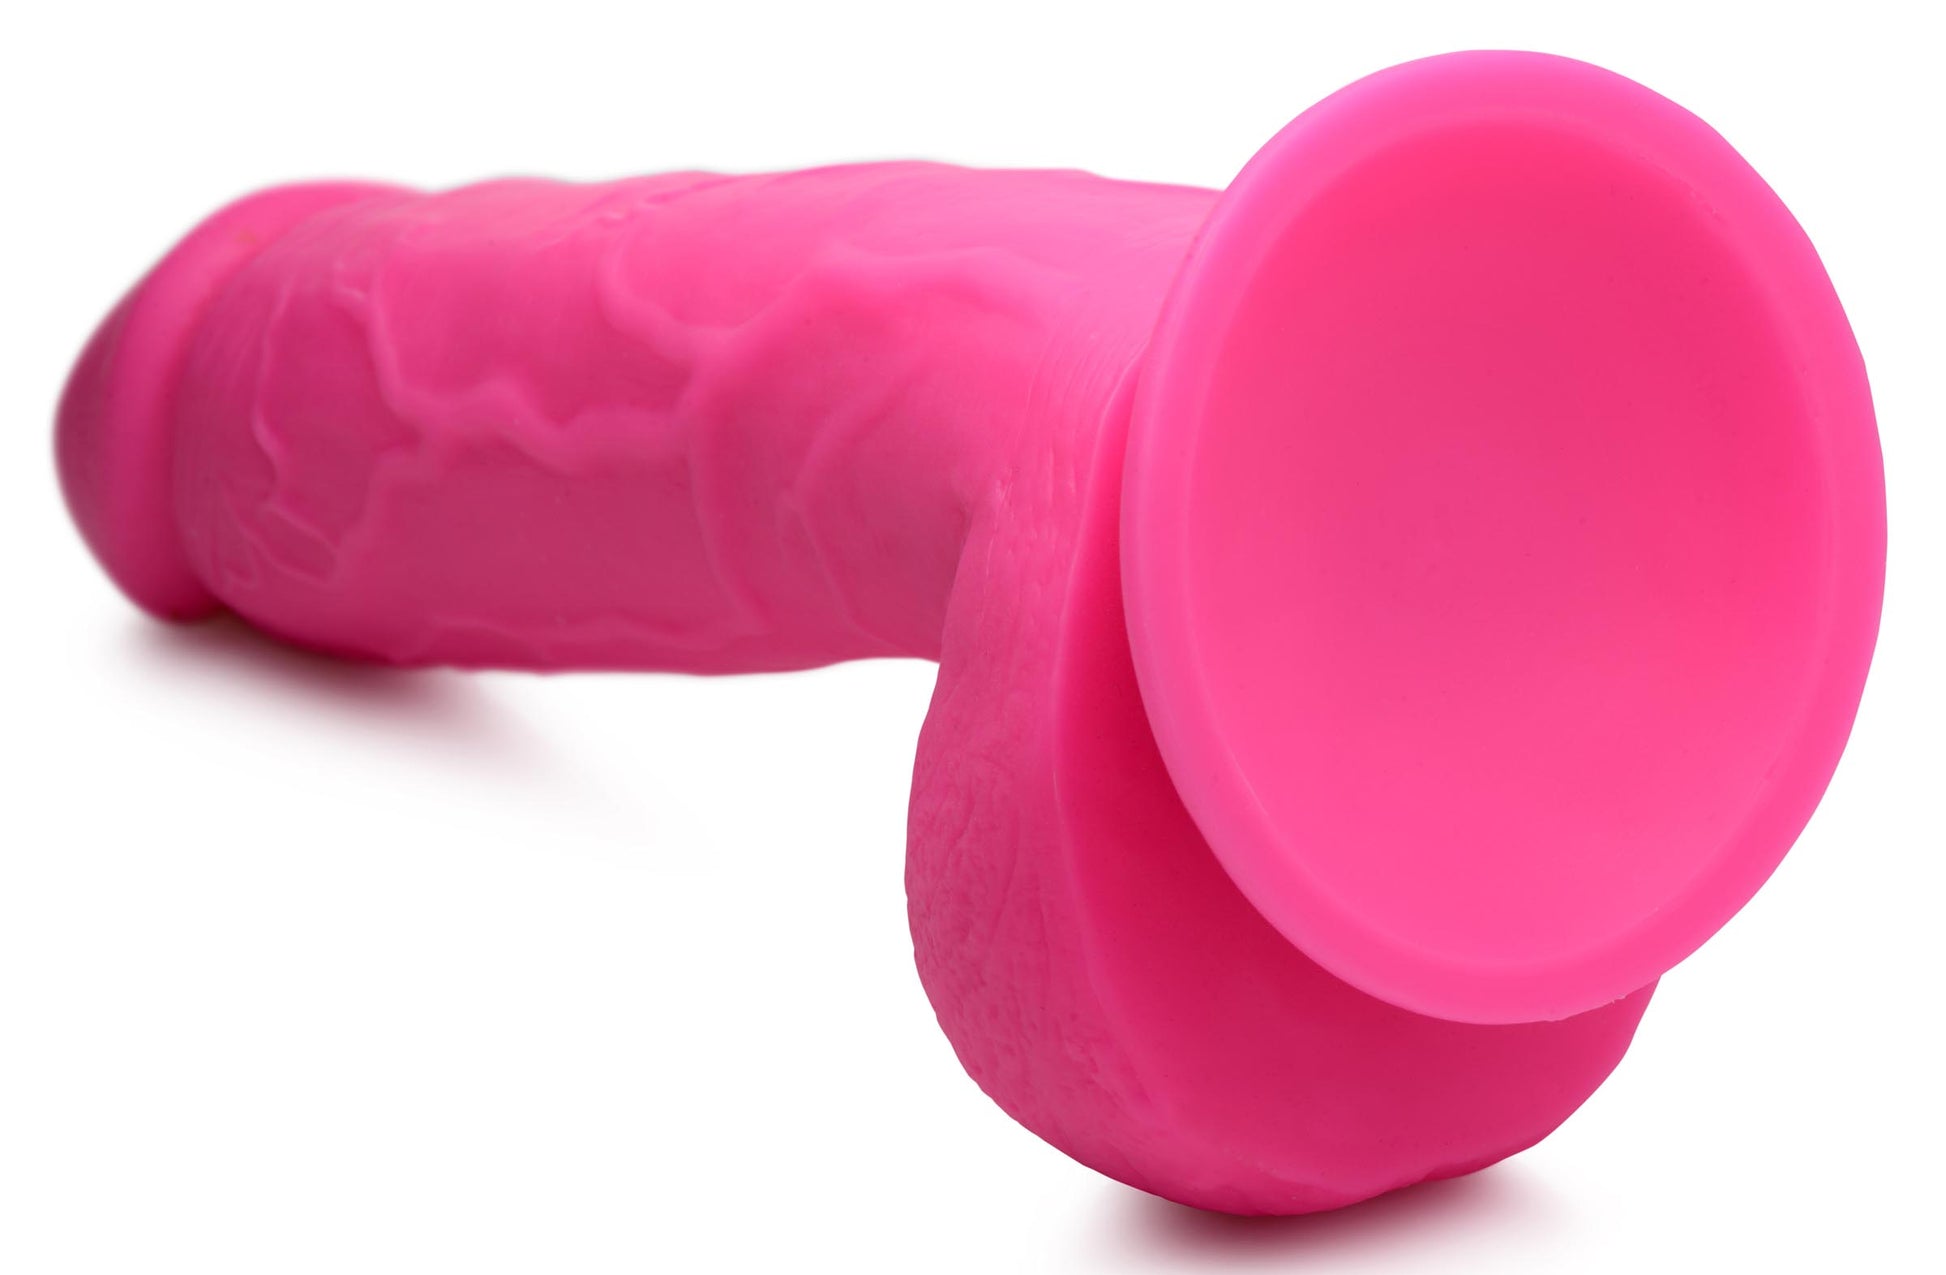 8.25 Inch Dildo with Balls - Pink - UABDSM